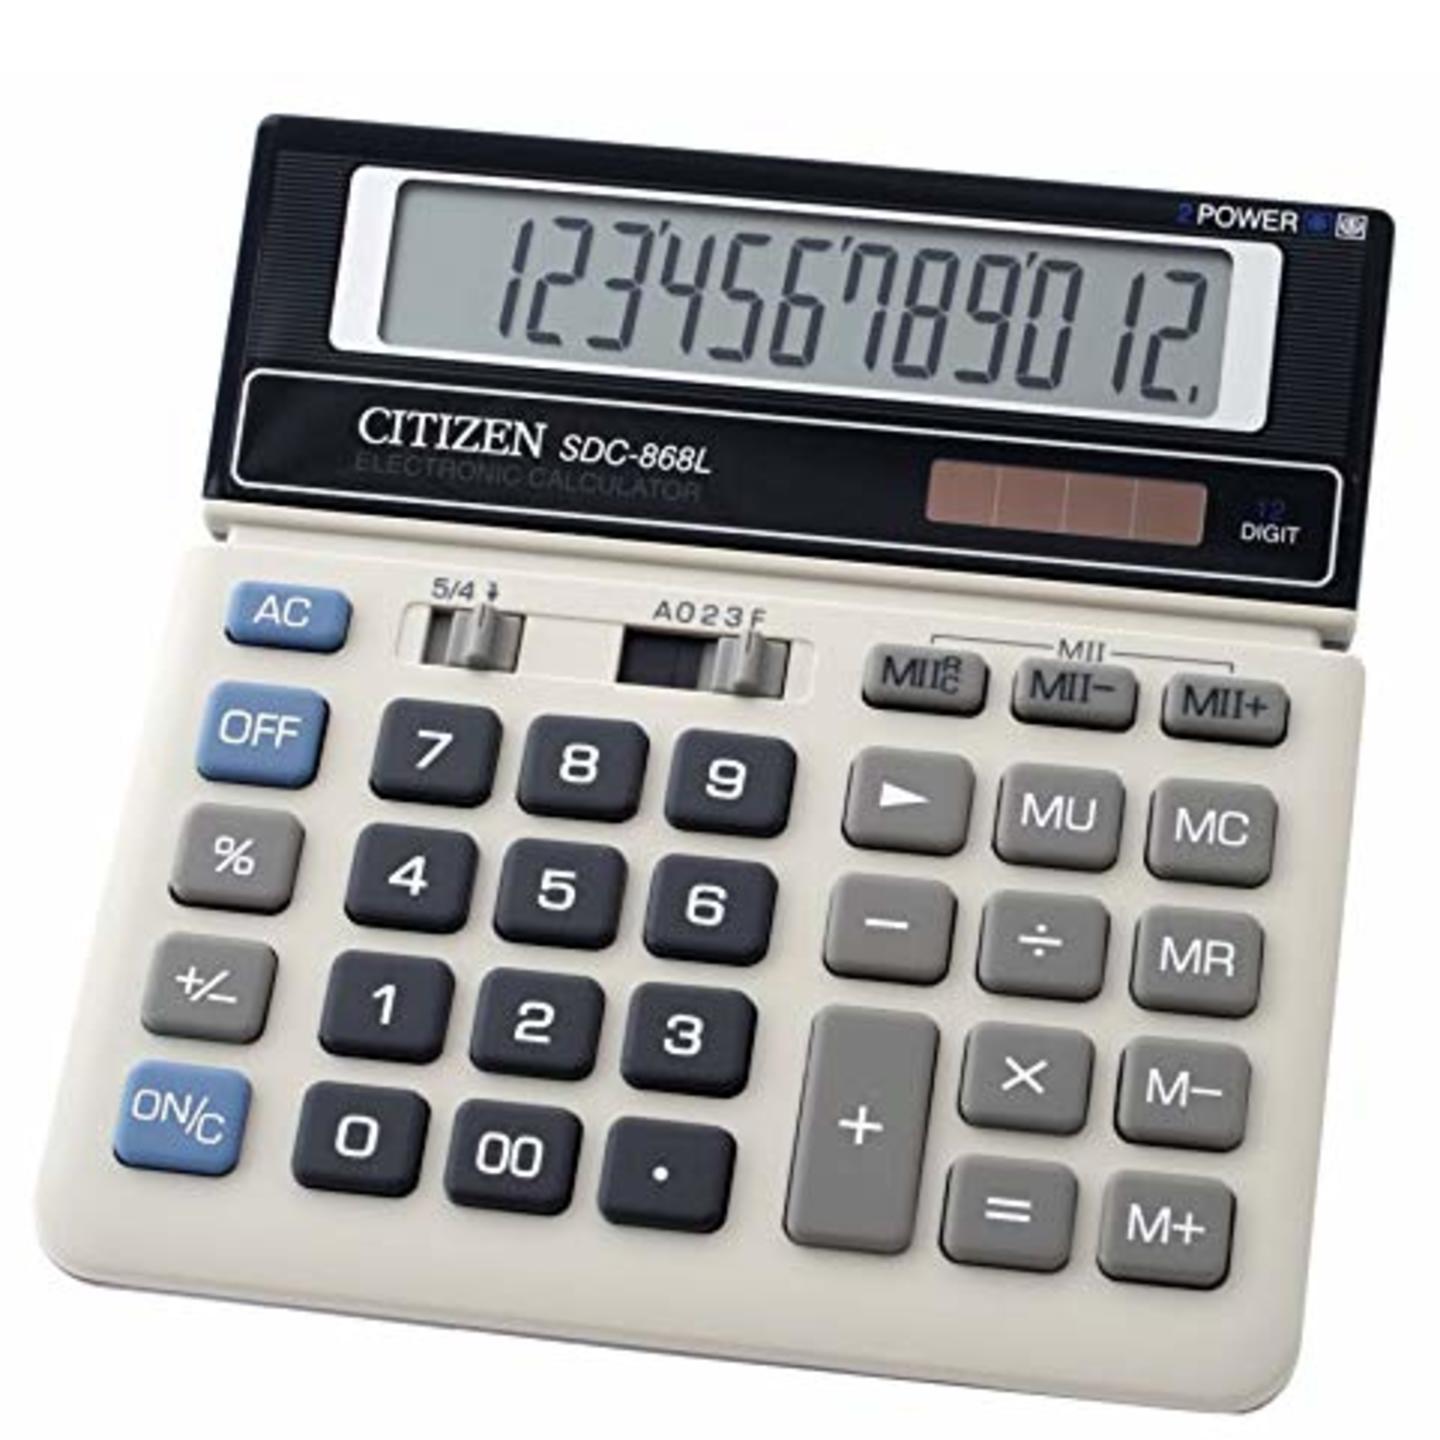 Citizen SDC-868L Basic Calculator